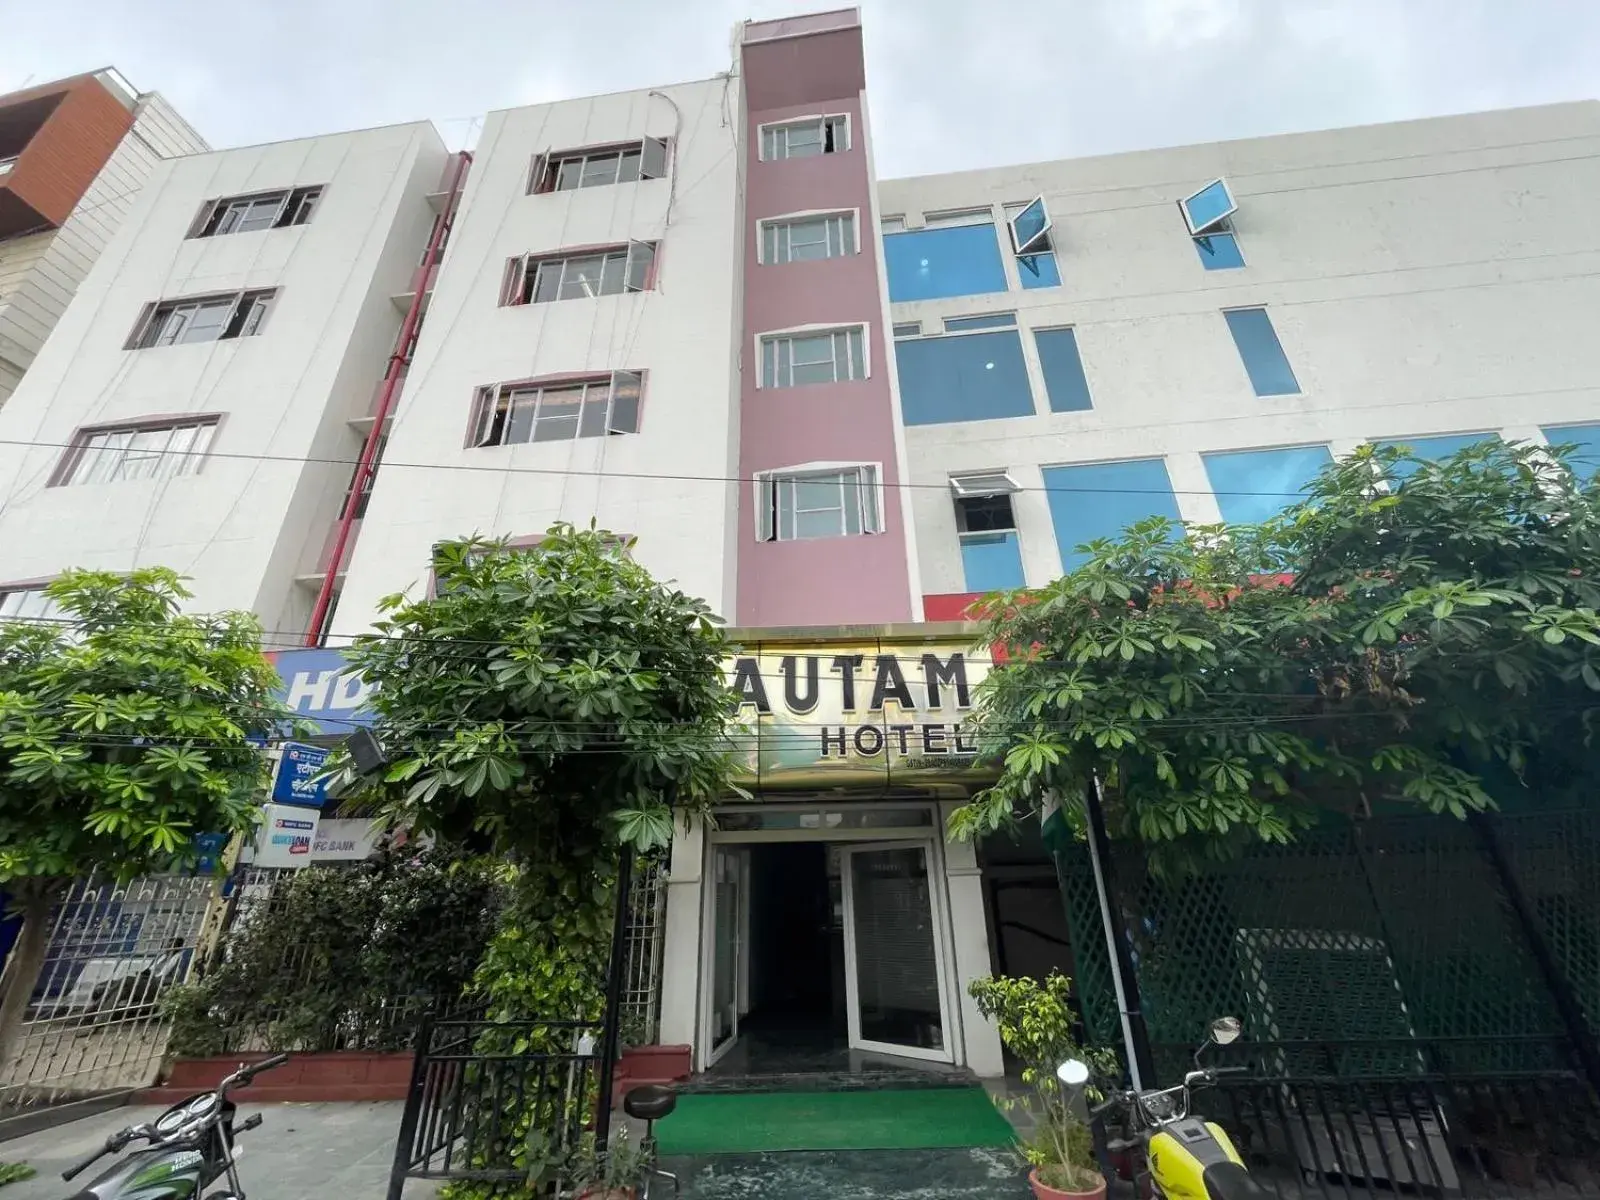 Property Building in Gautam Hotel